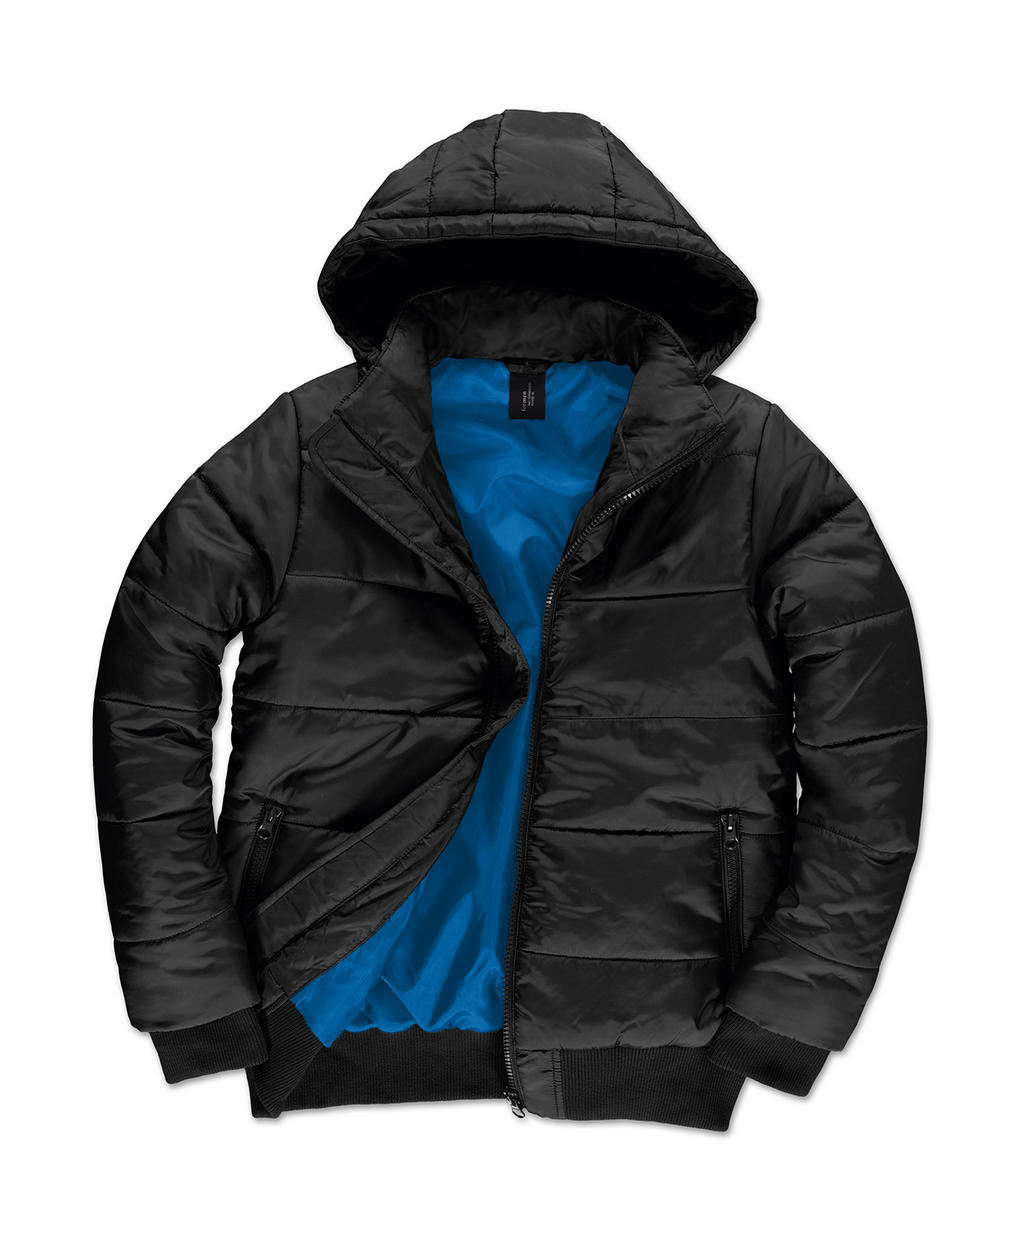  Superhood/men Jacket in Farbe Black/Cobalt Blue